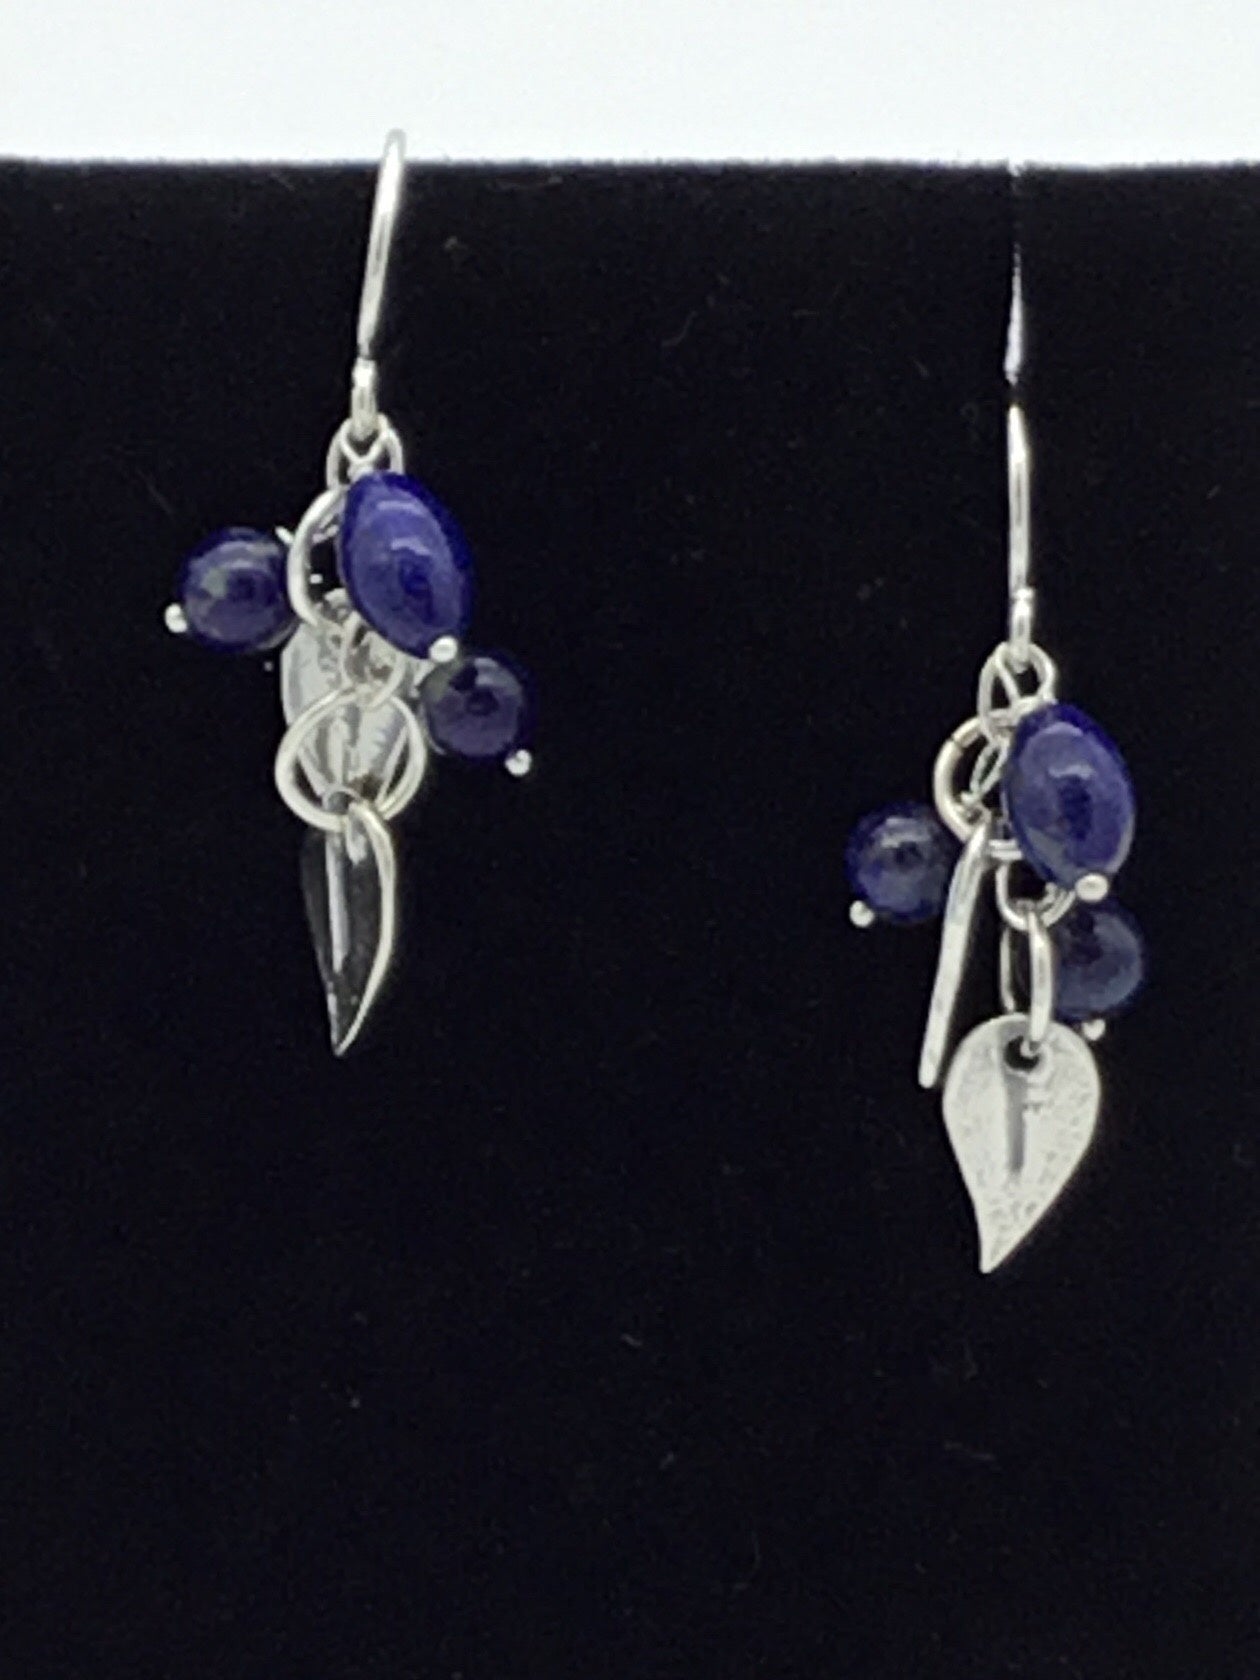 Blueberry earring by Berthiel Evens